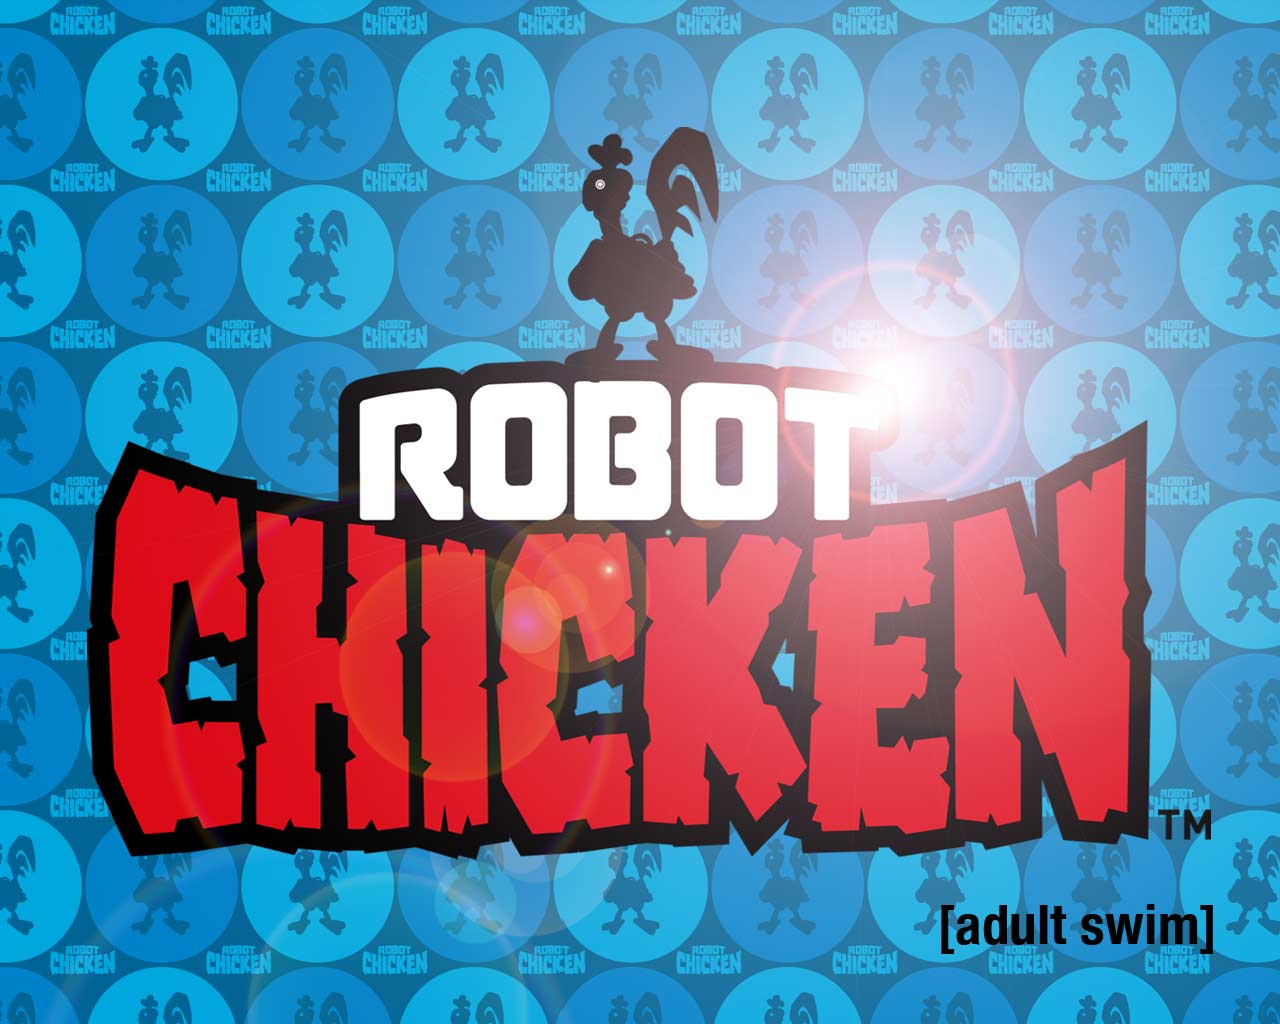 Wallpaper Ficea: New Best of Cartoon Robot Chicken Wallpaper